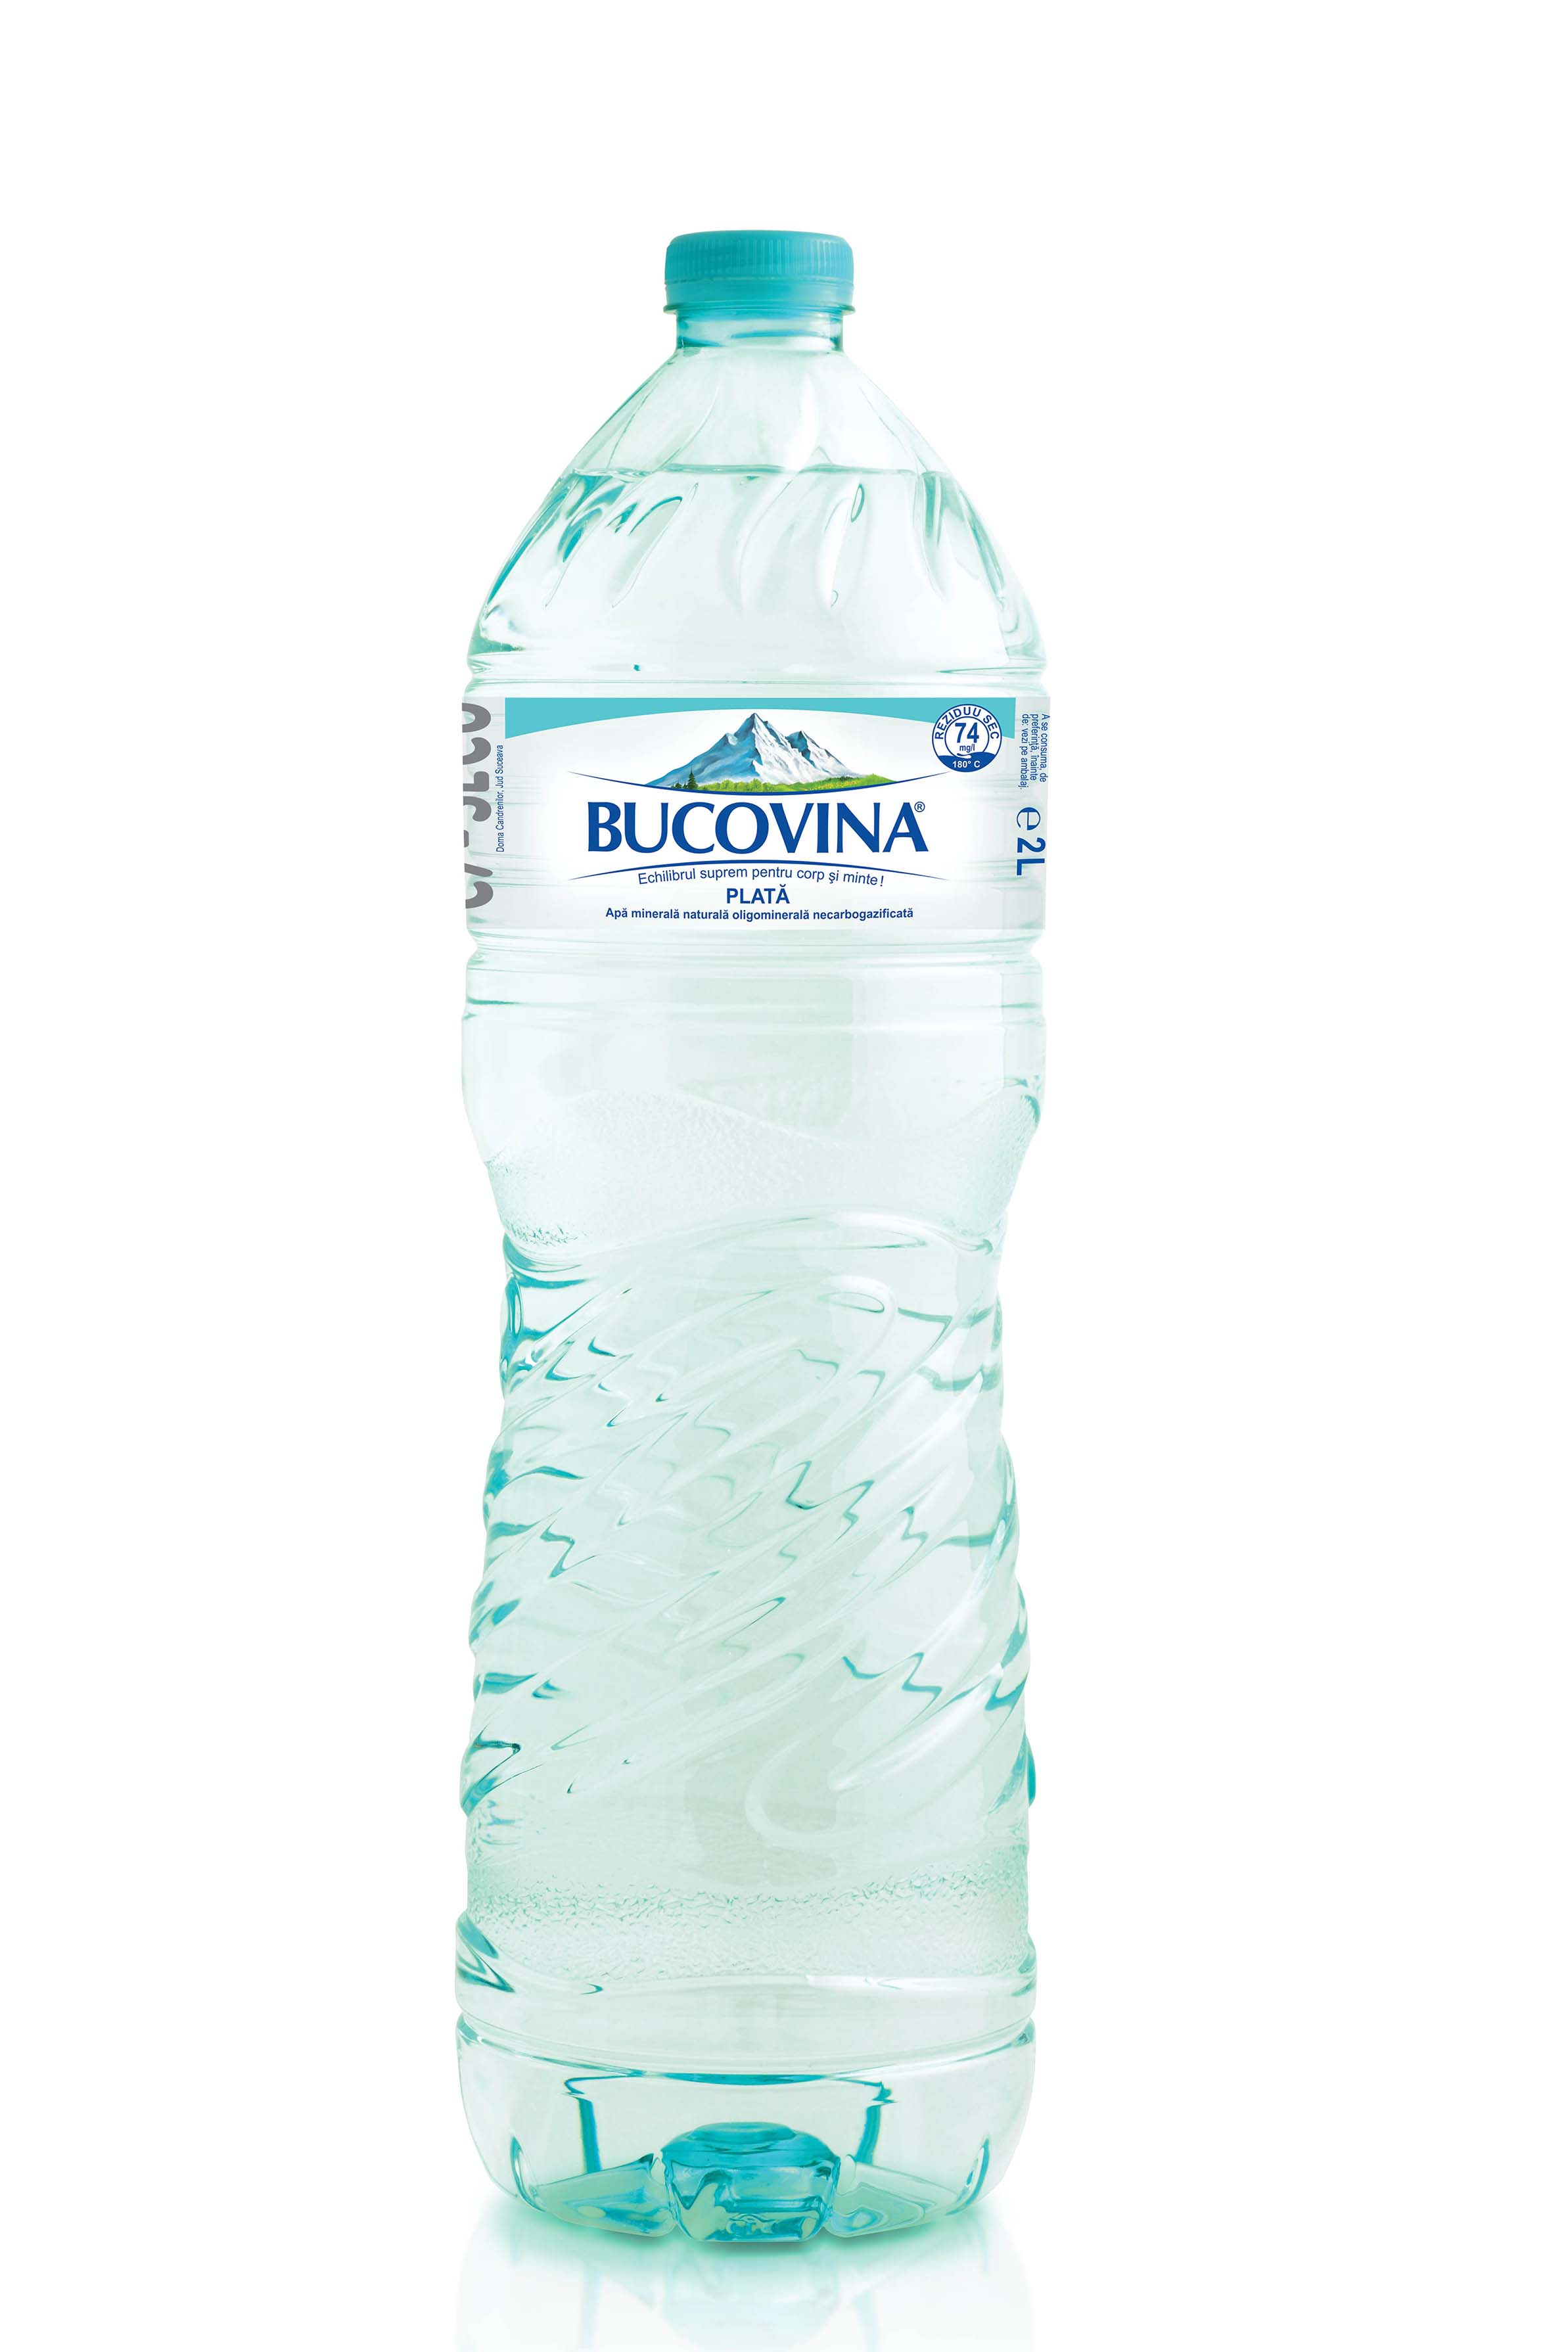 Rio Bukovina bottle